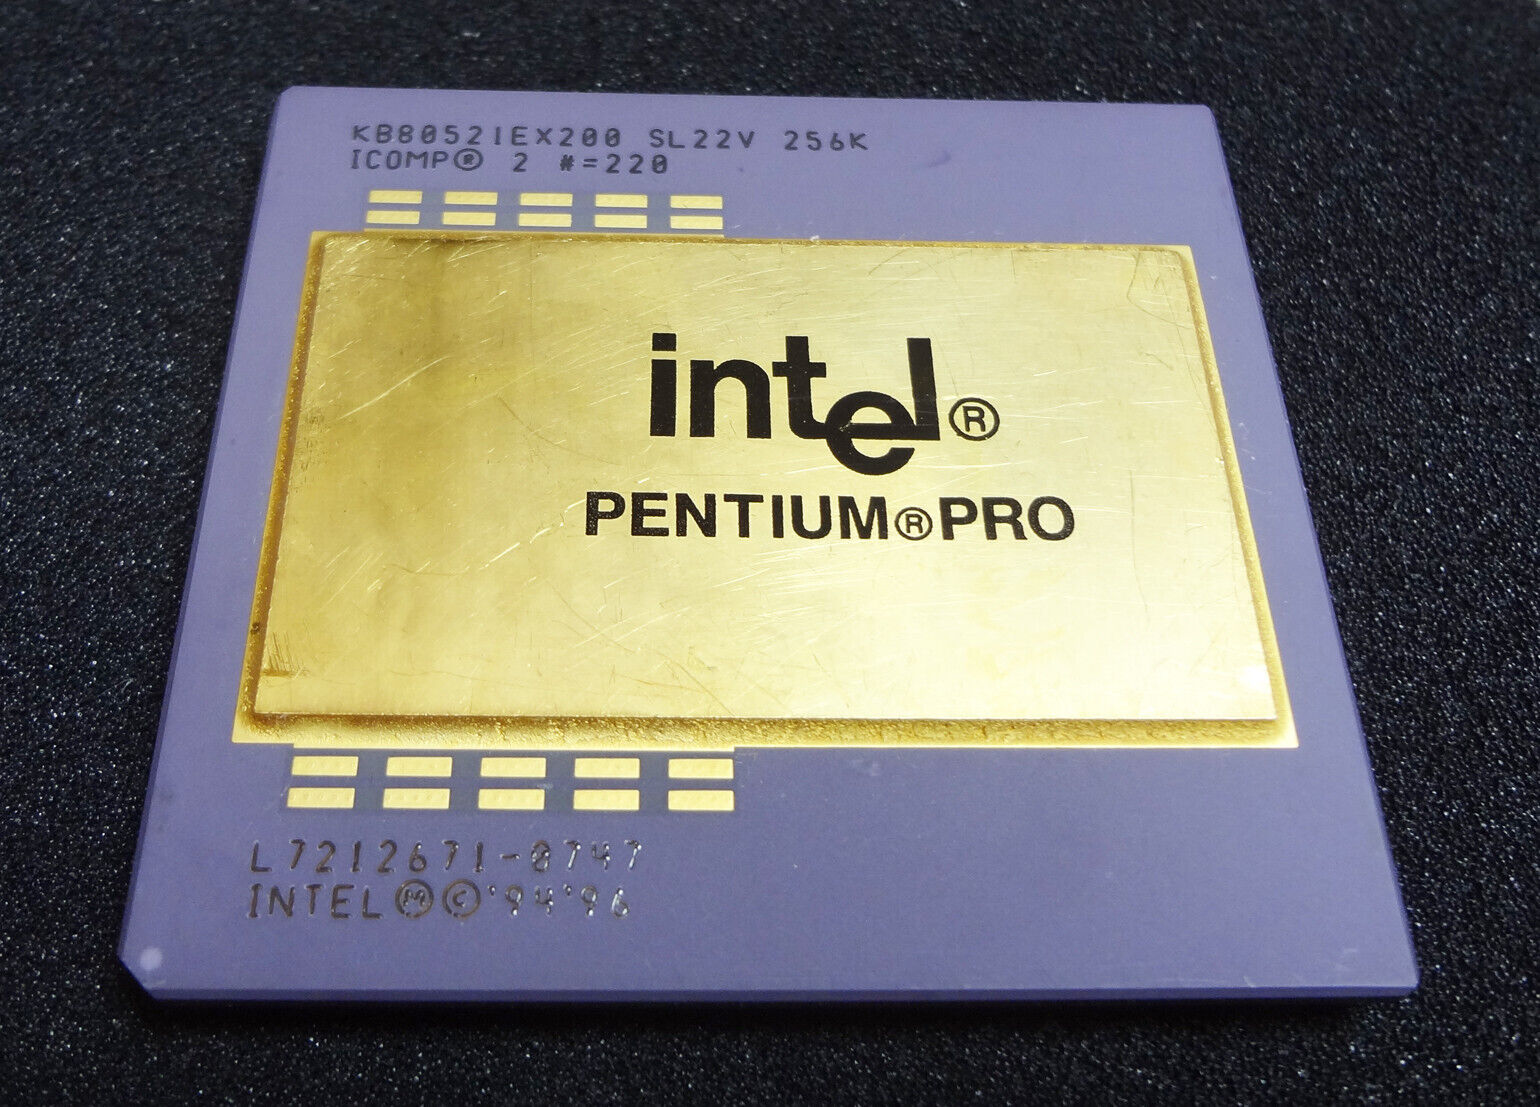 Vintage Intel Pentium Pro 200 MHz 256K KB80521EX200 SL22V Socket 8 Collectible